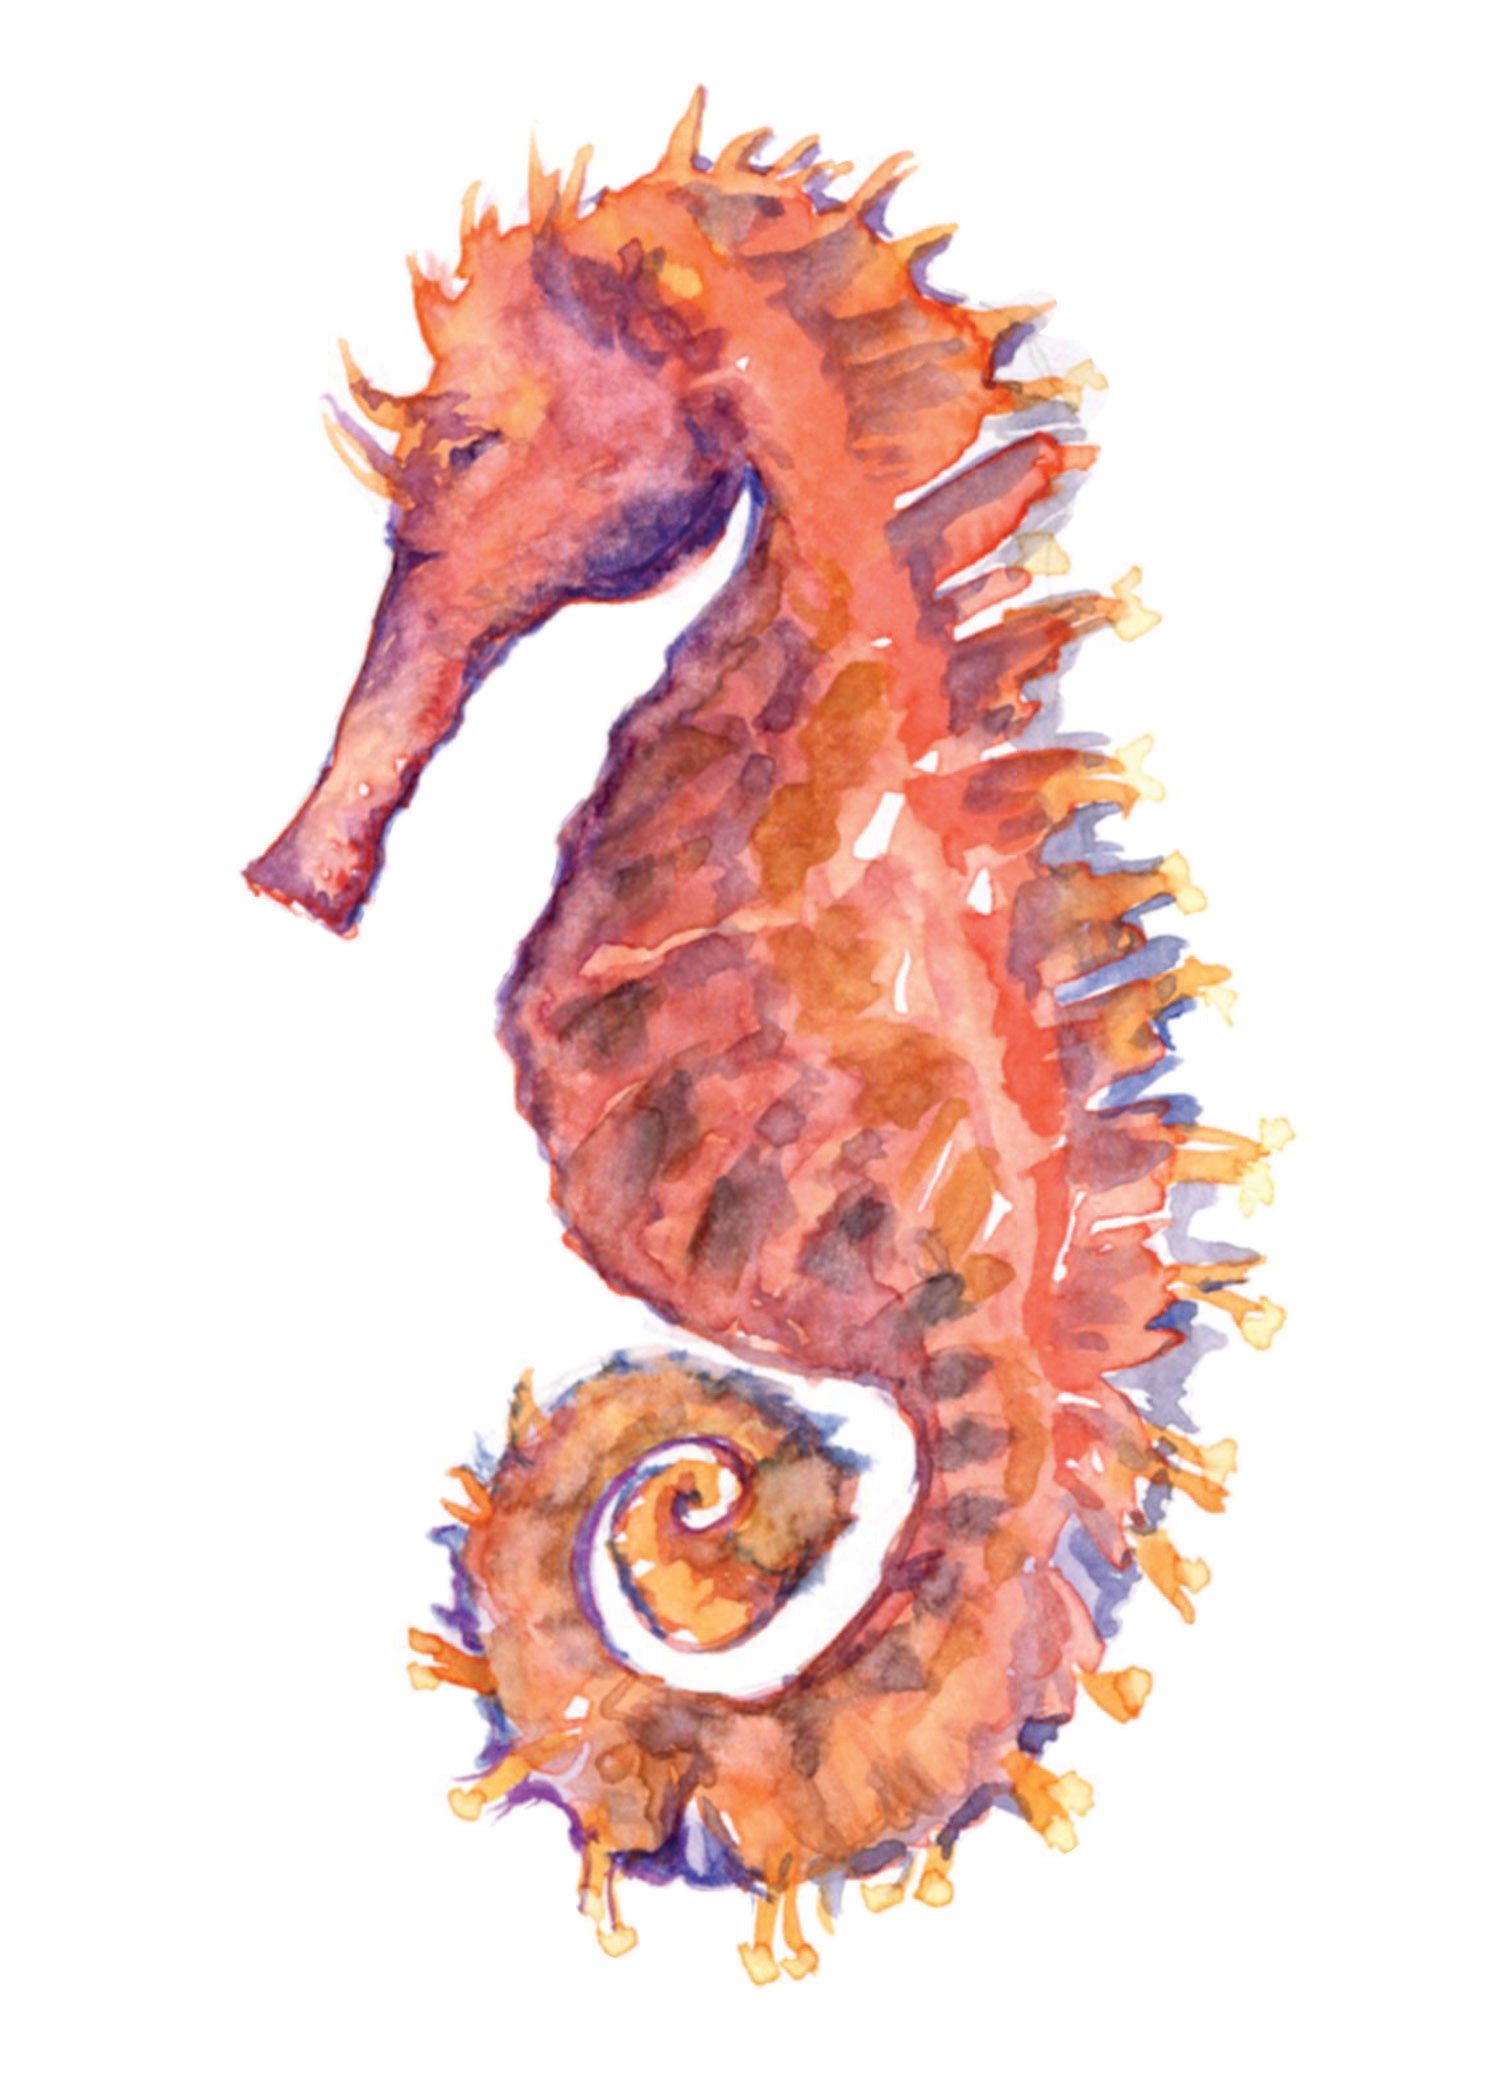 Coral Seahorse Watercolor Print Art - Flamingo Shores - Original Art for Home Decor and Gifts